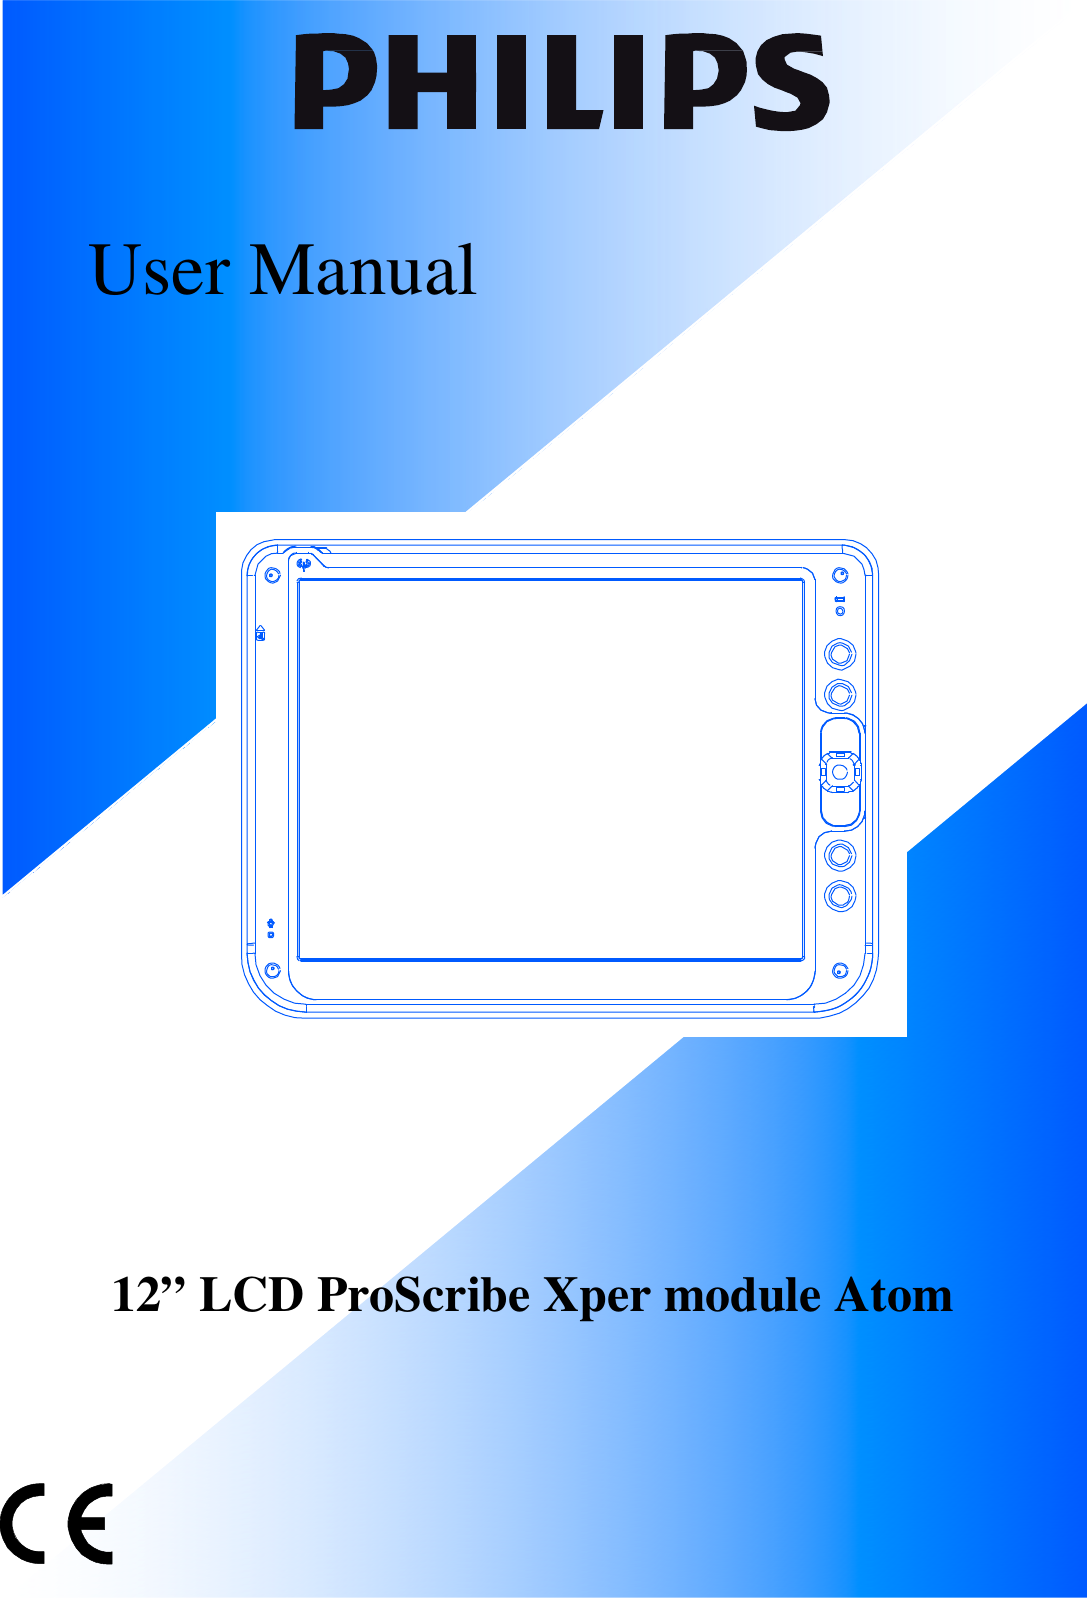        User Manual                                              12” LCD ProScribe Xper module Atom              